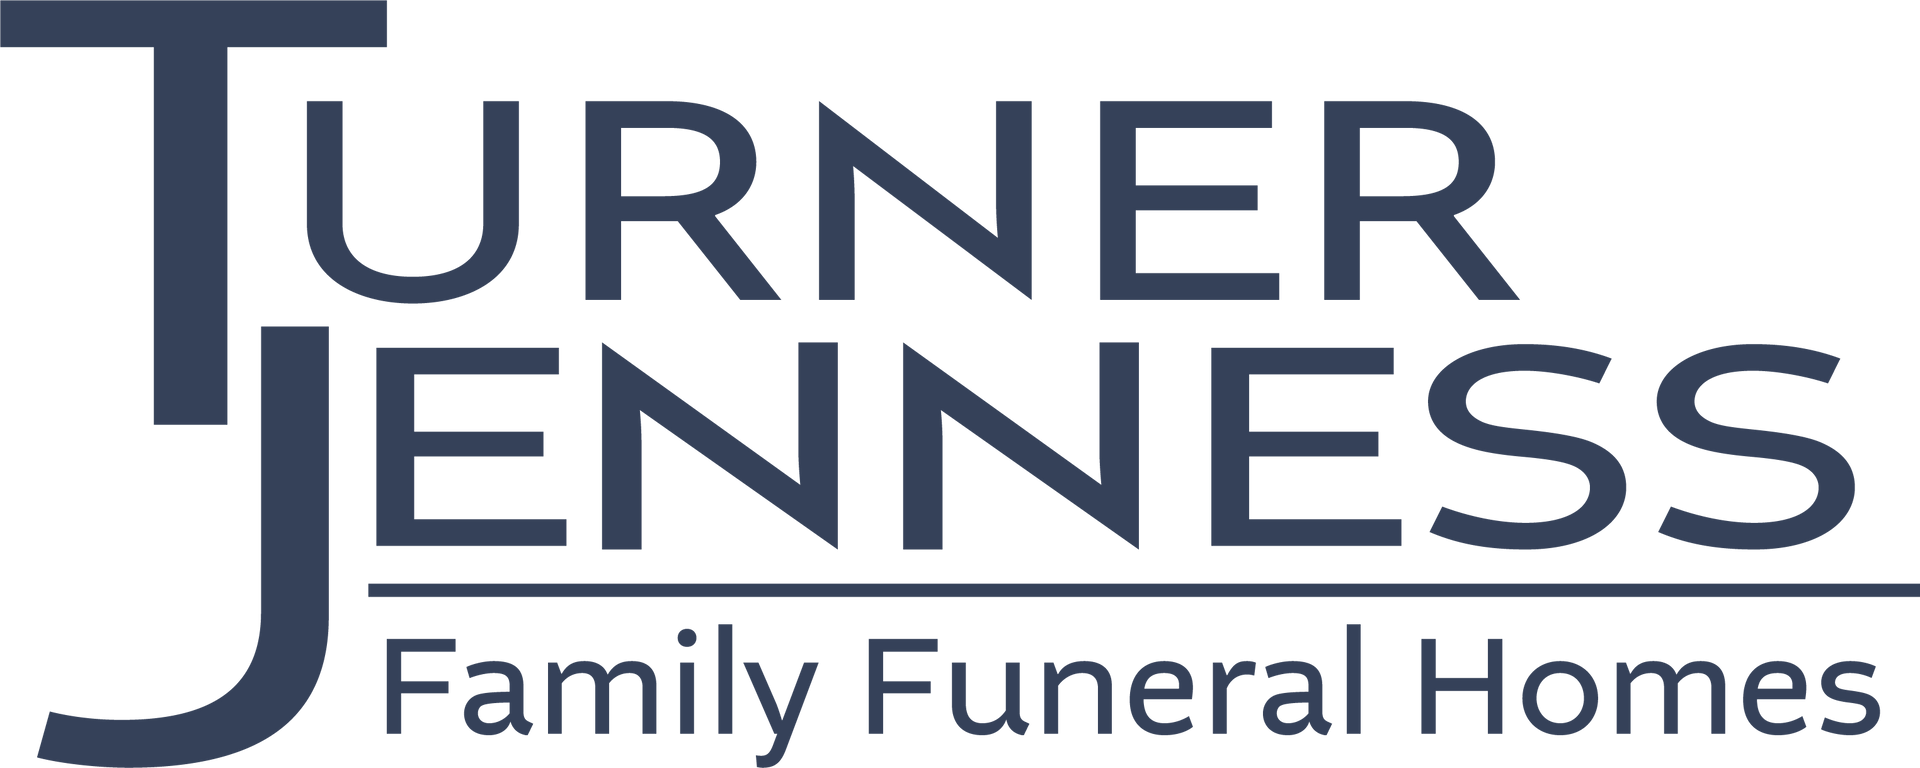 Turner Jenness Family Funeral Home Logo